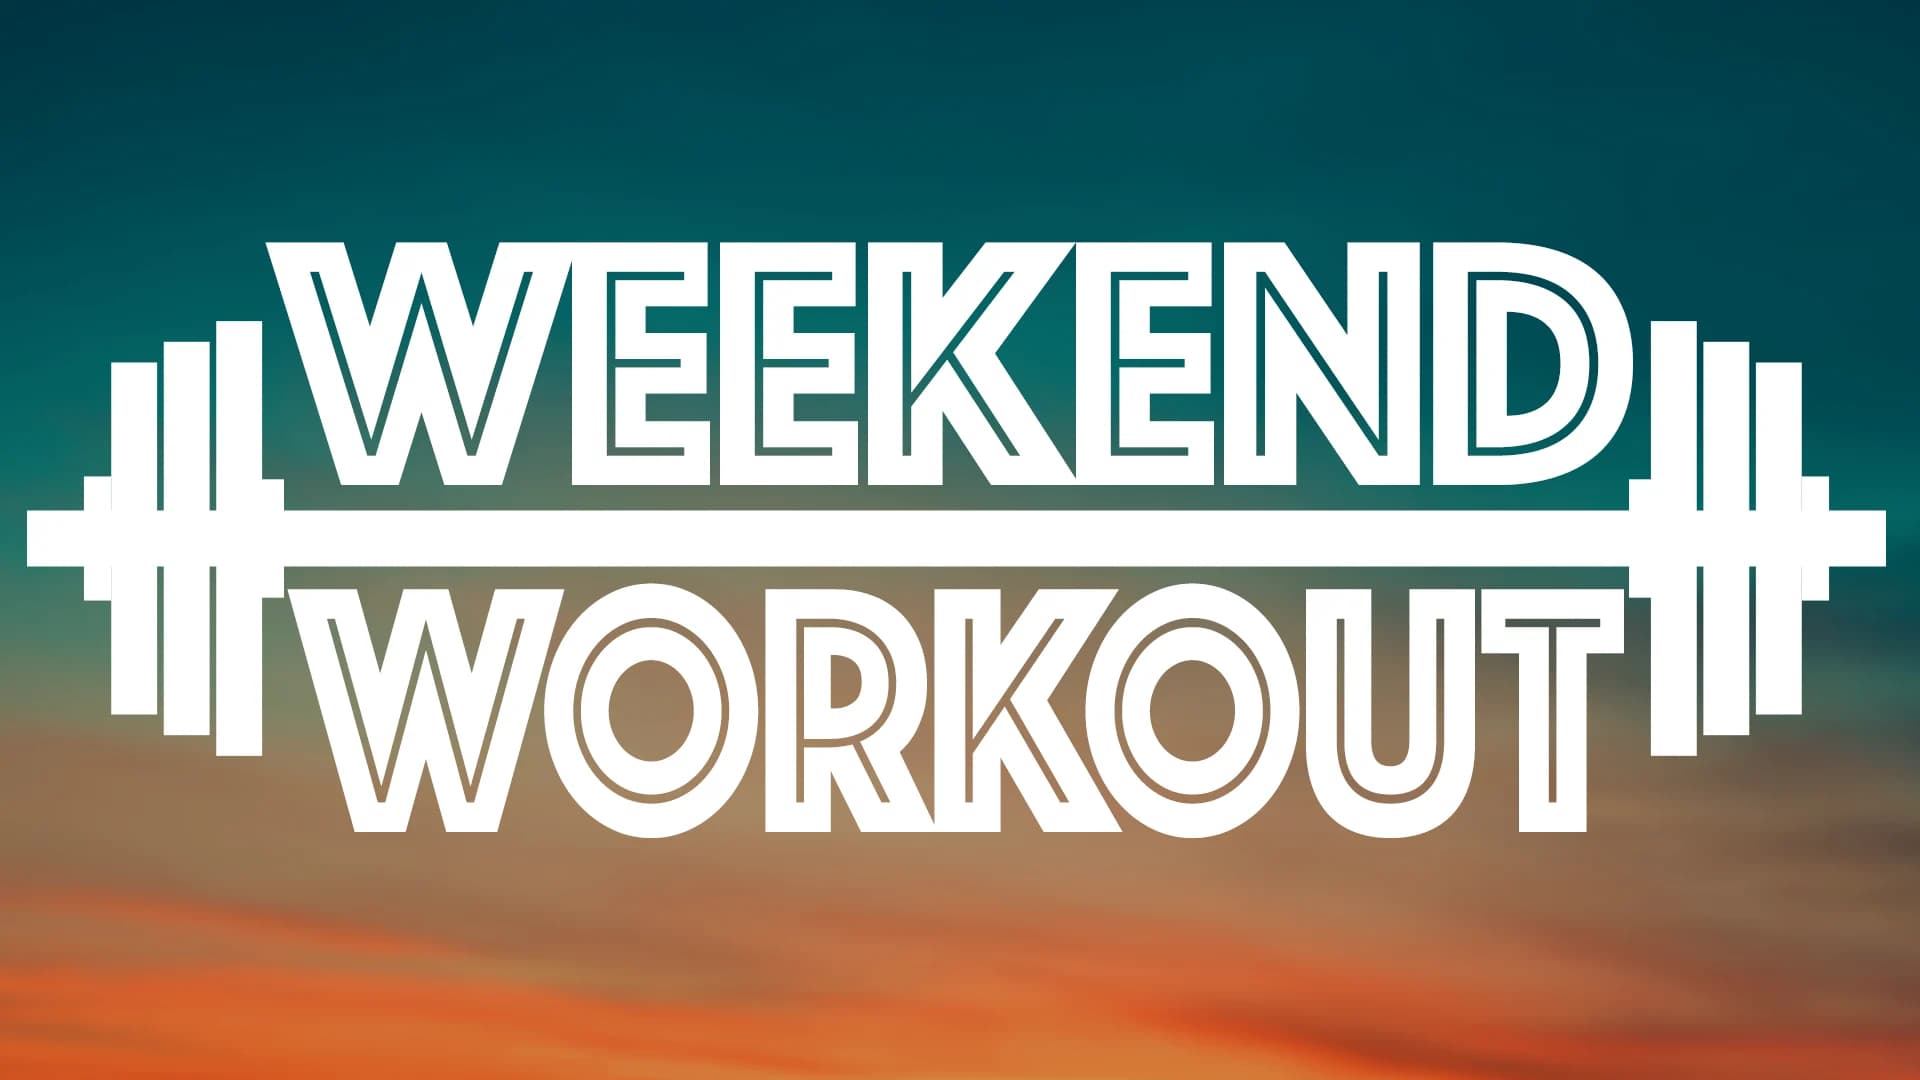 Photos: Weekend Workout Series